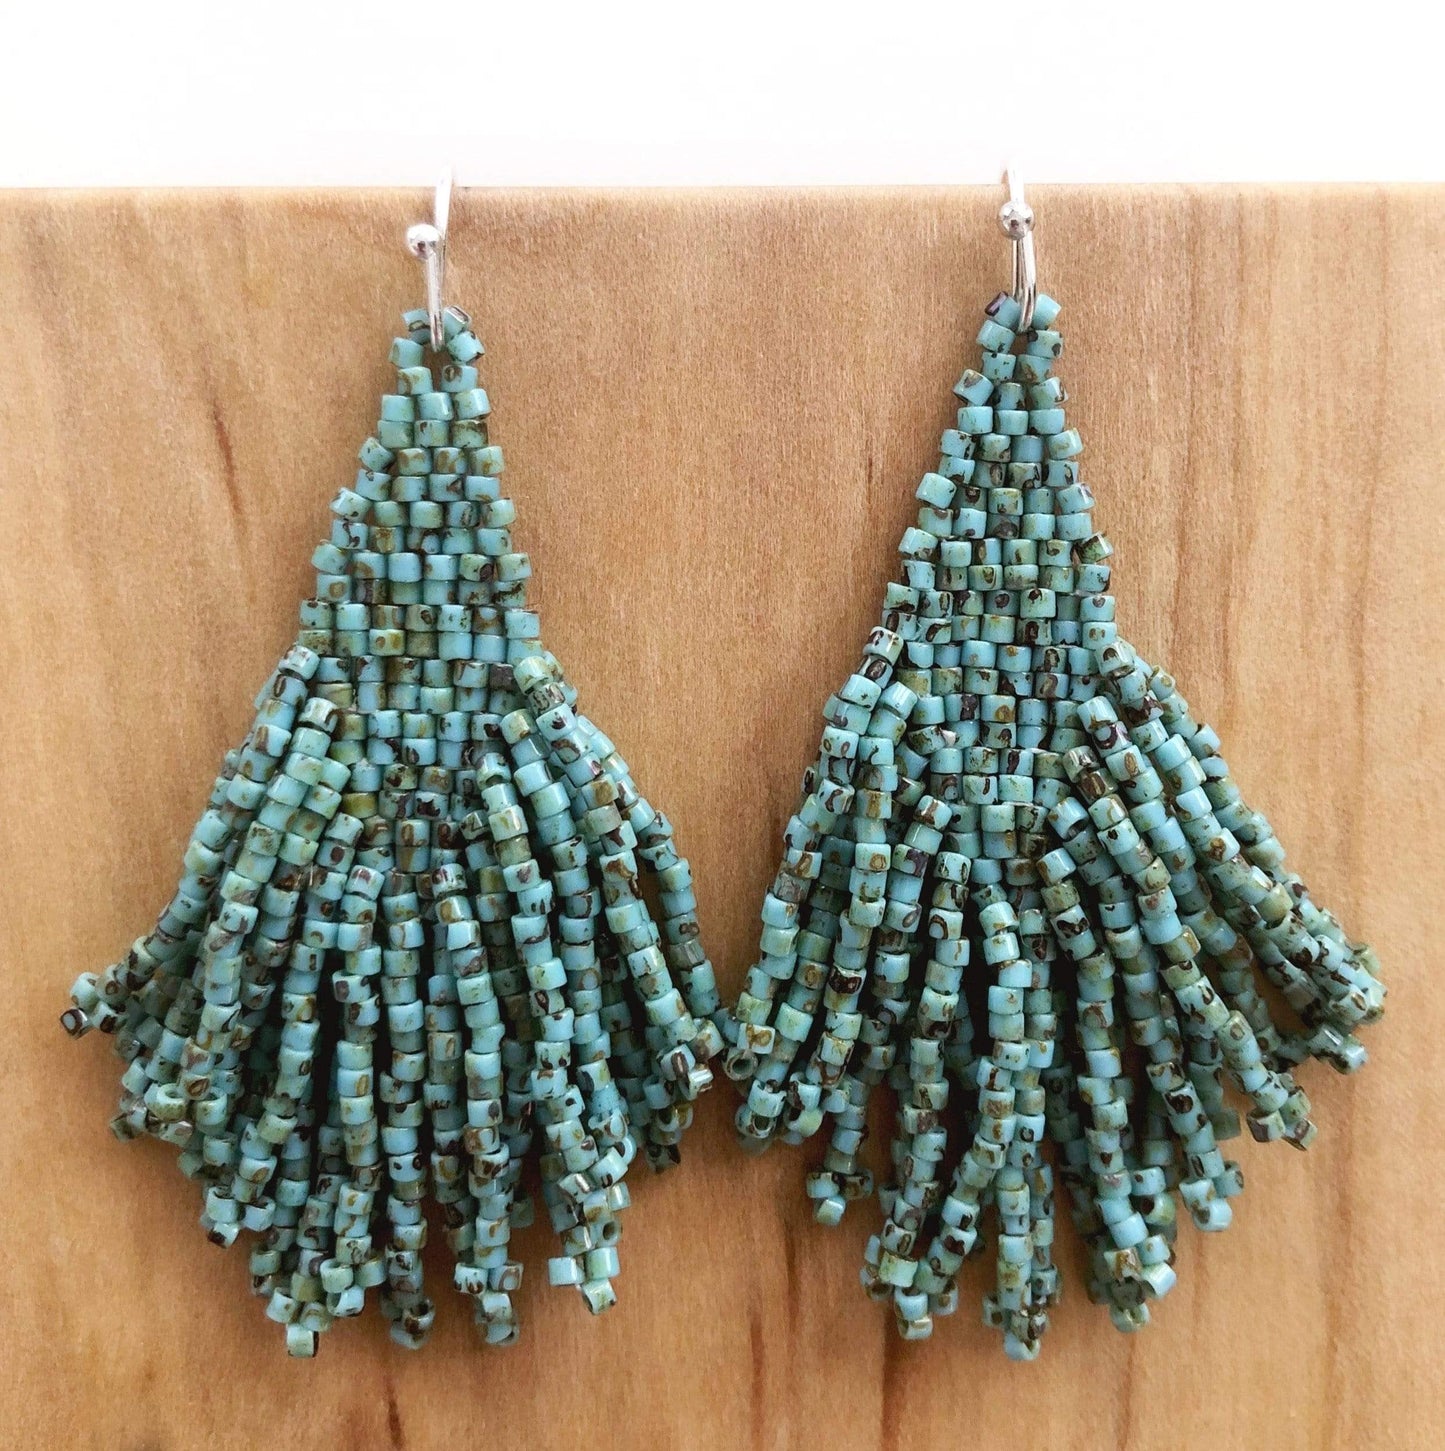 Lillie Nell Sokko Hasimbish Earrings in Turquoise